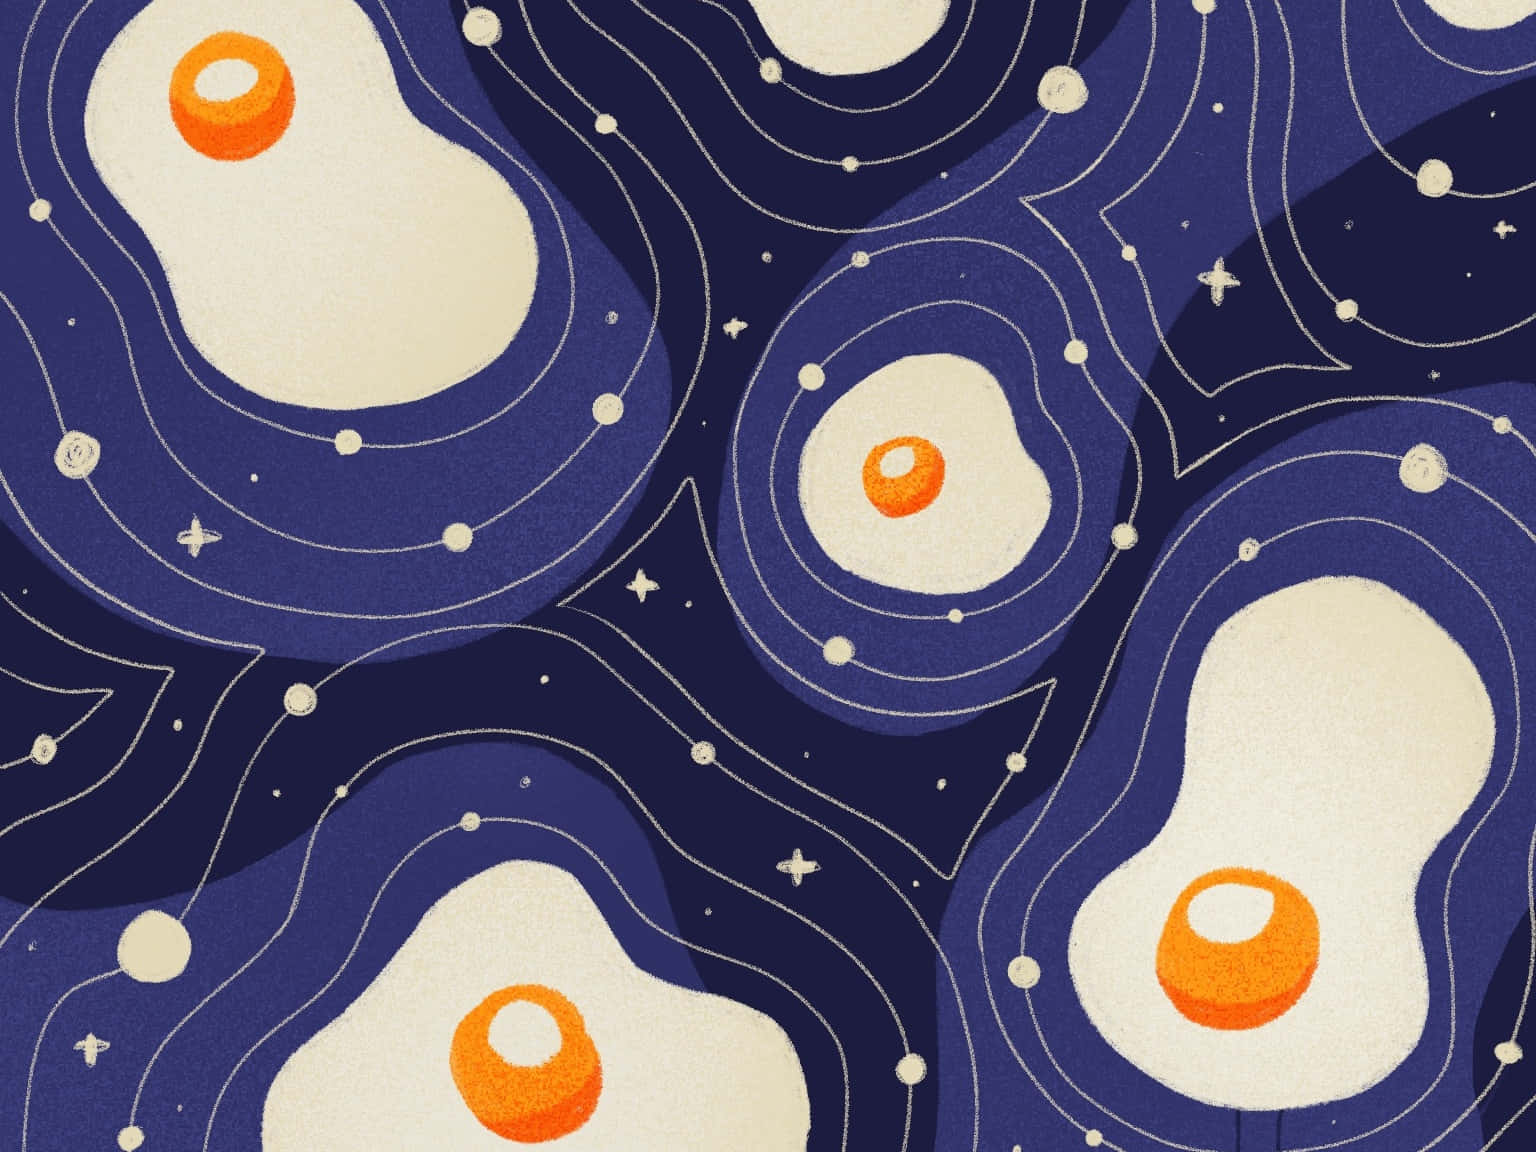 Floating Eggs Google Desktop Wallpaper